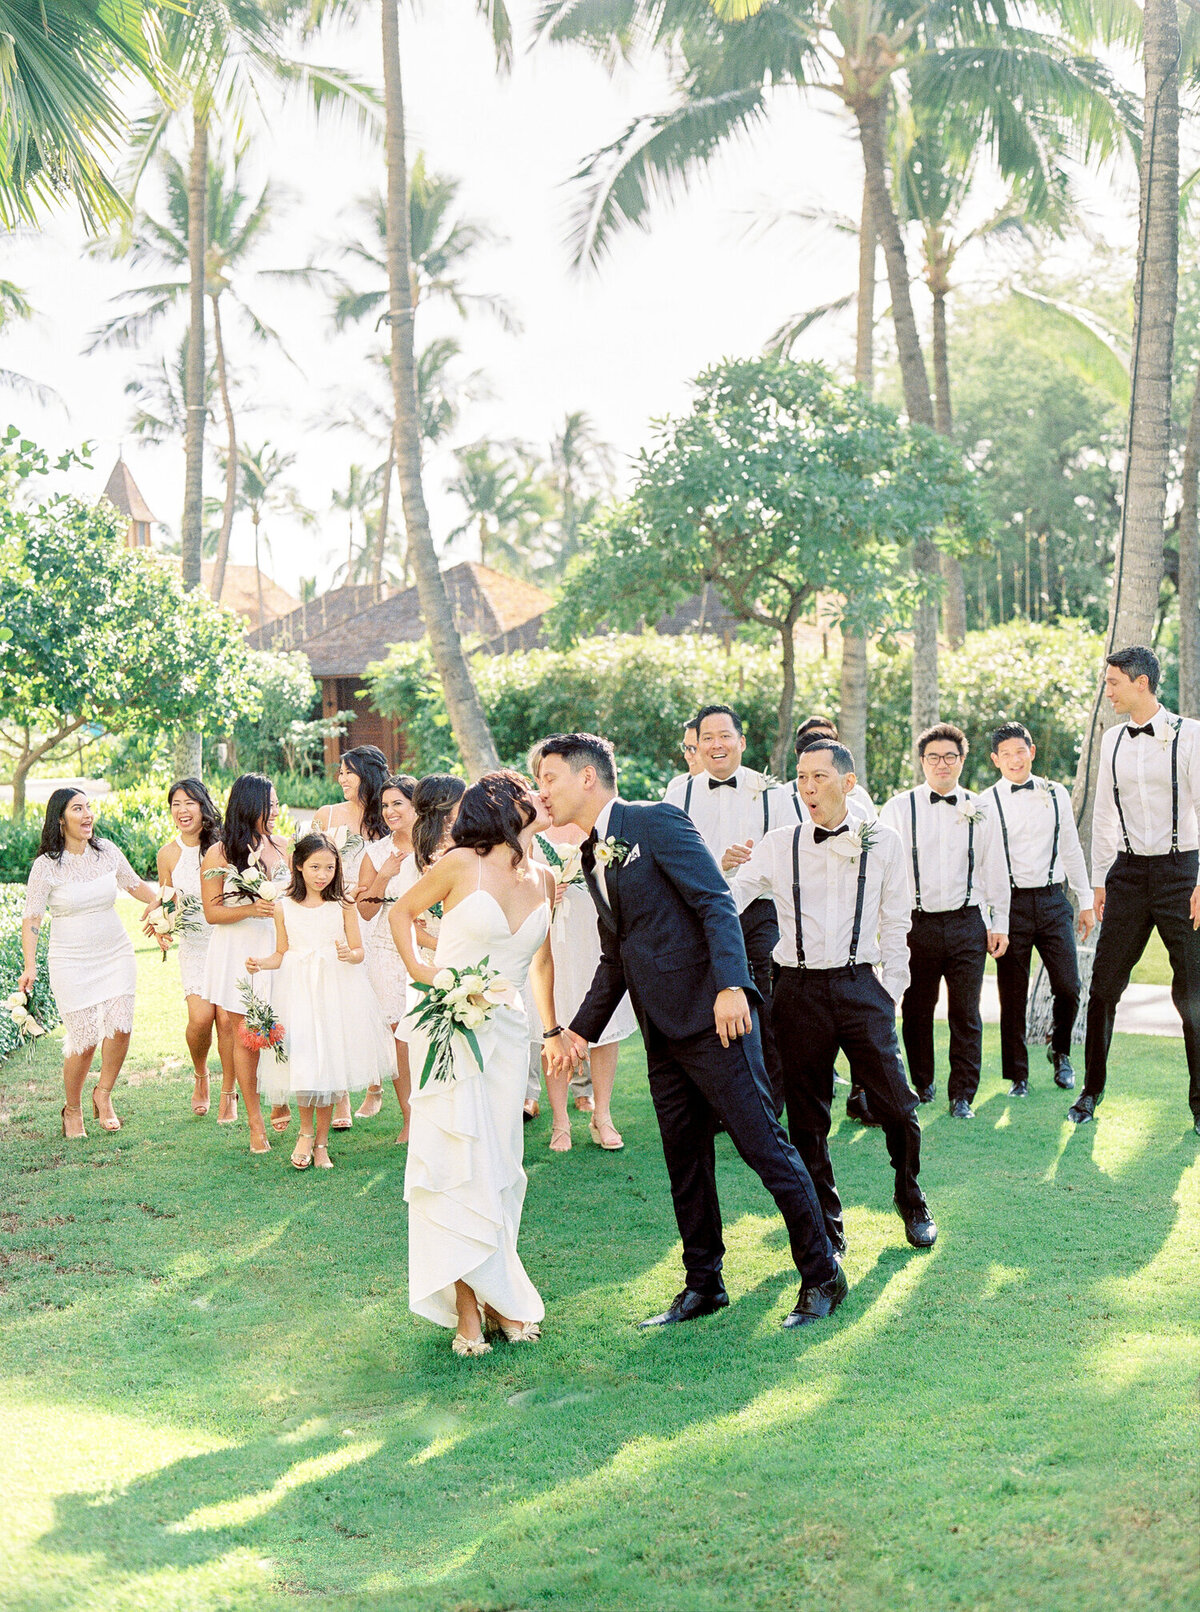 Chelsea + Mike | Hawaii Wedding & Lifestyle Photography | Ashley Goodwin Photography